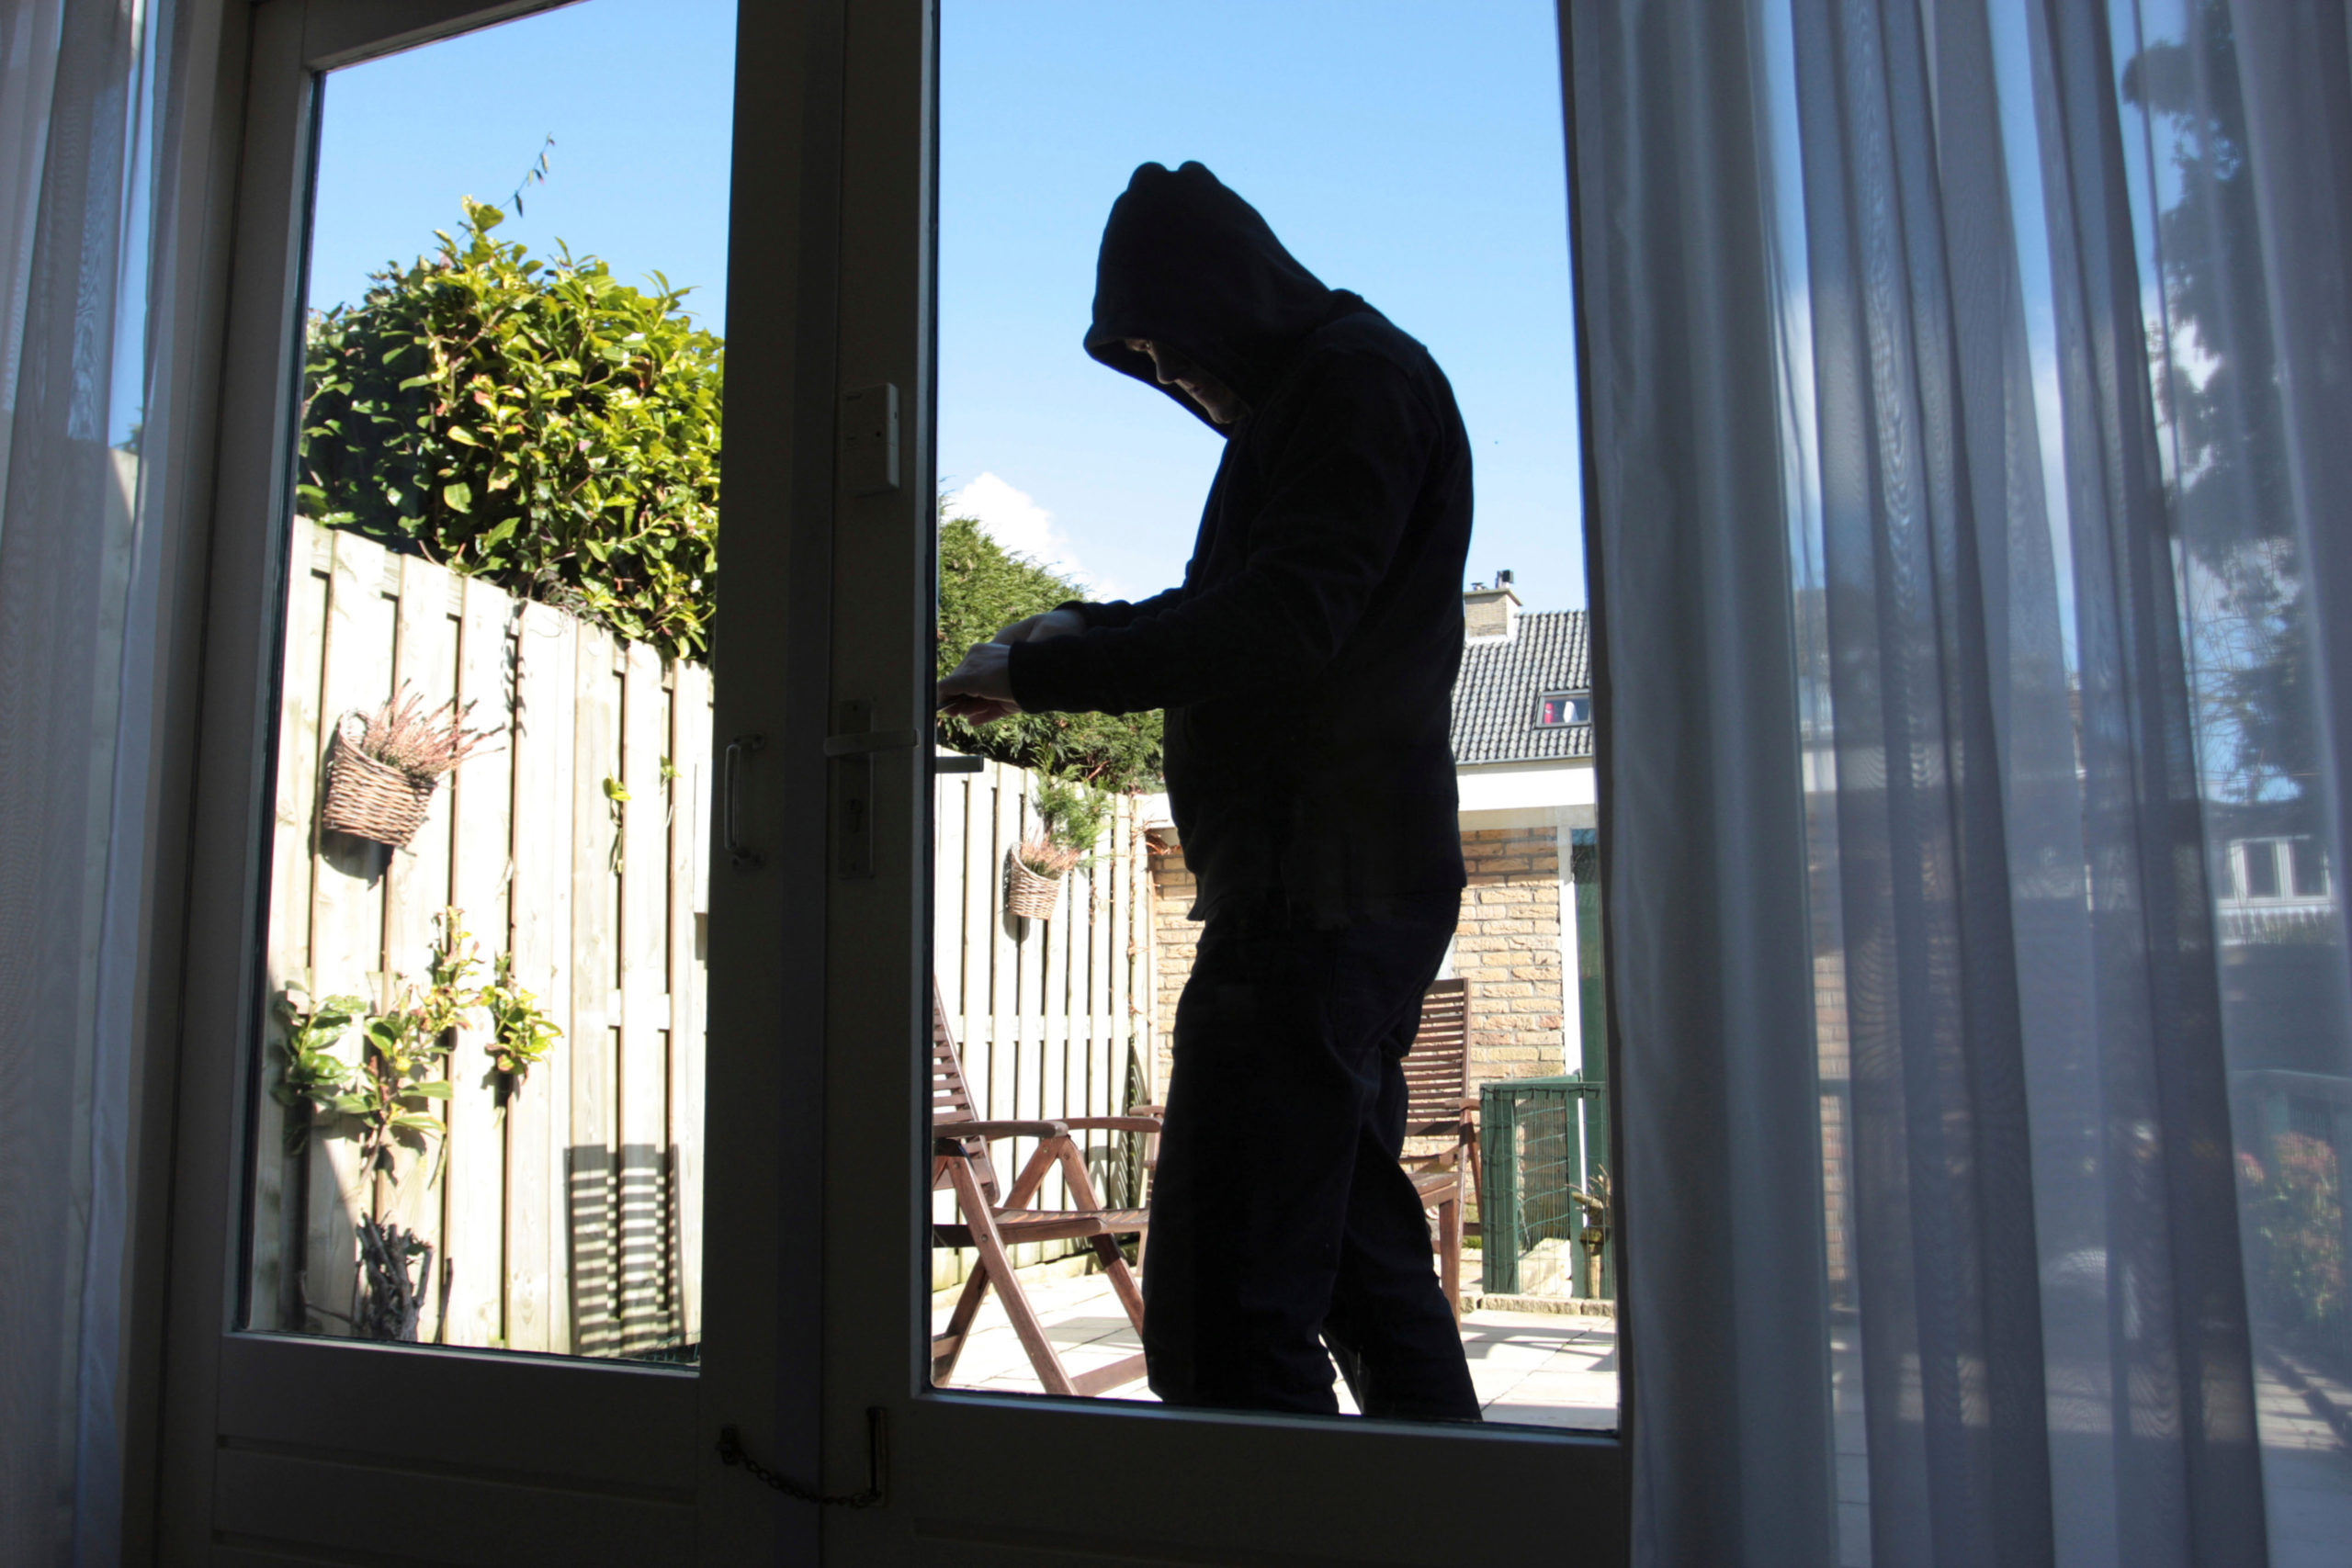 Alert Delta boys nab burglar who broke into their home